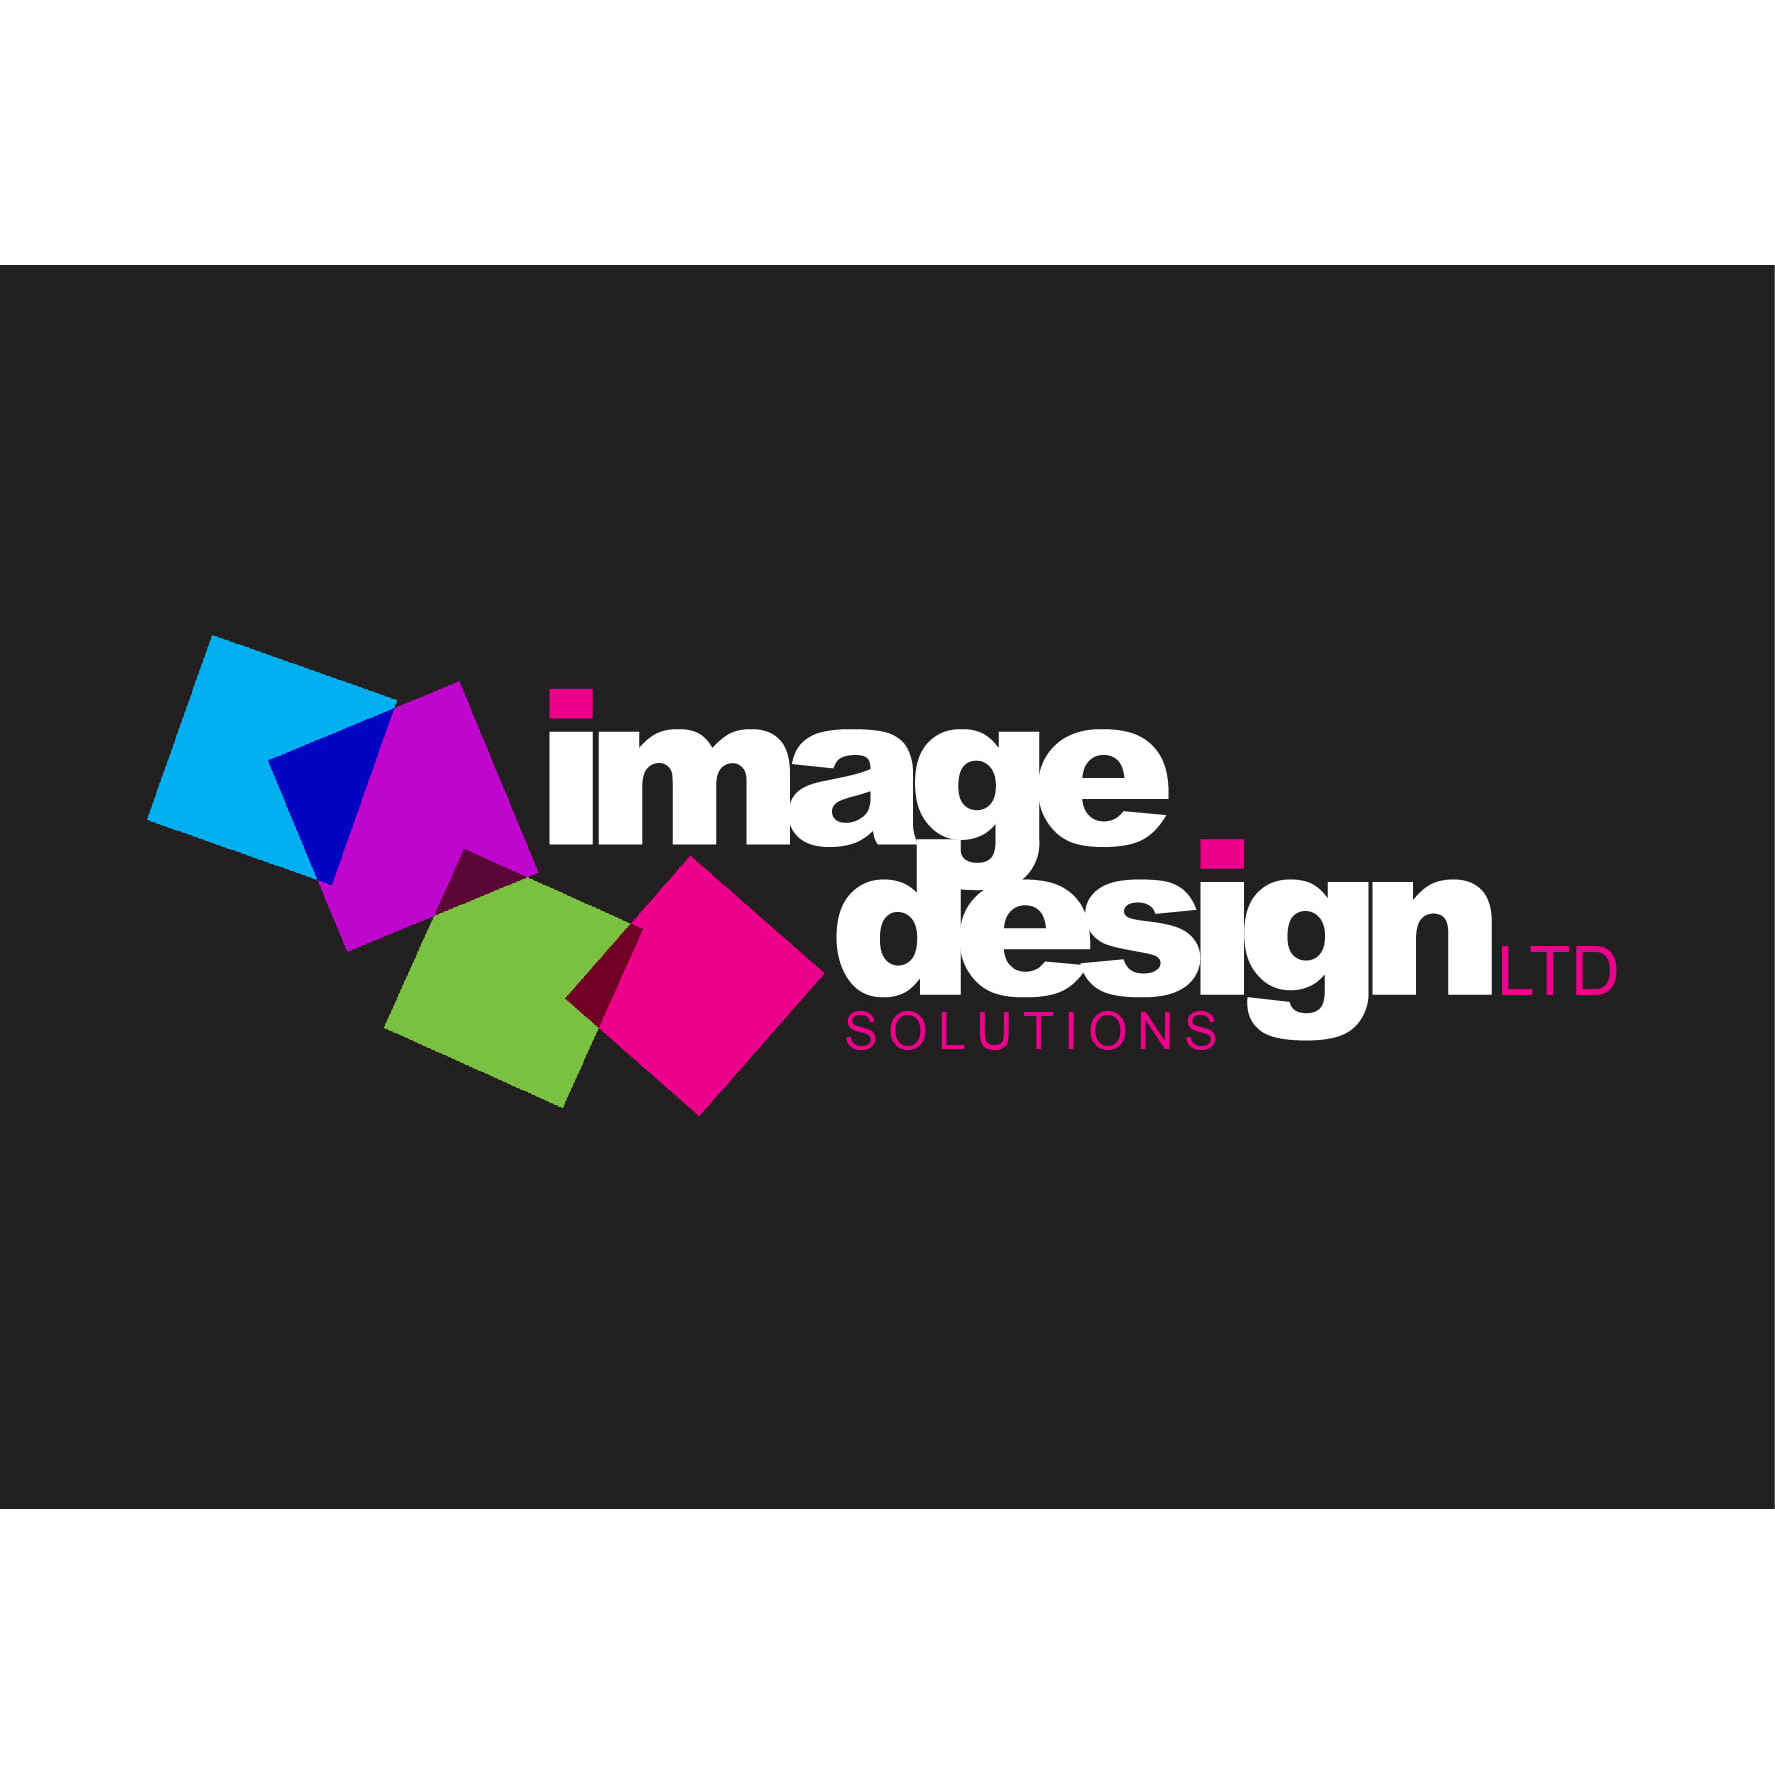 Image Design Solutions Ltd - Peterborough, Lincolnshire PE6 8RD - 01778 346785 | ShowMeLocal.com